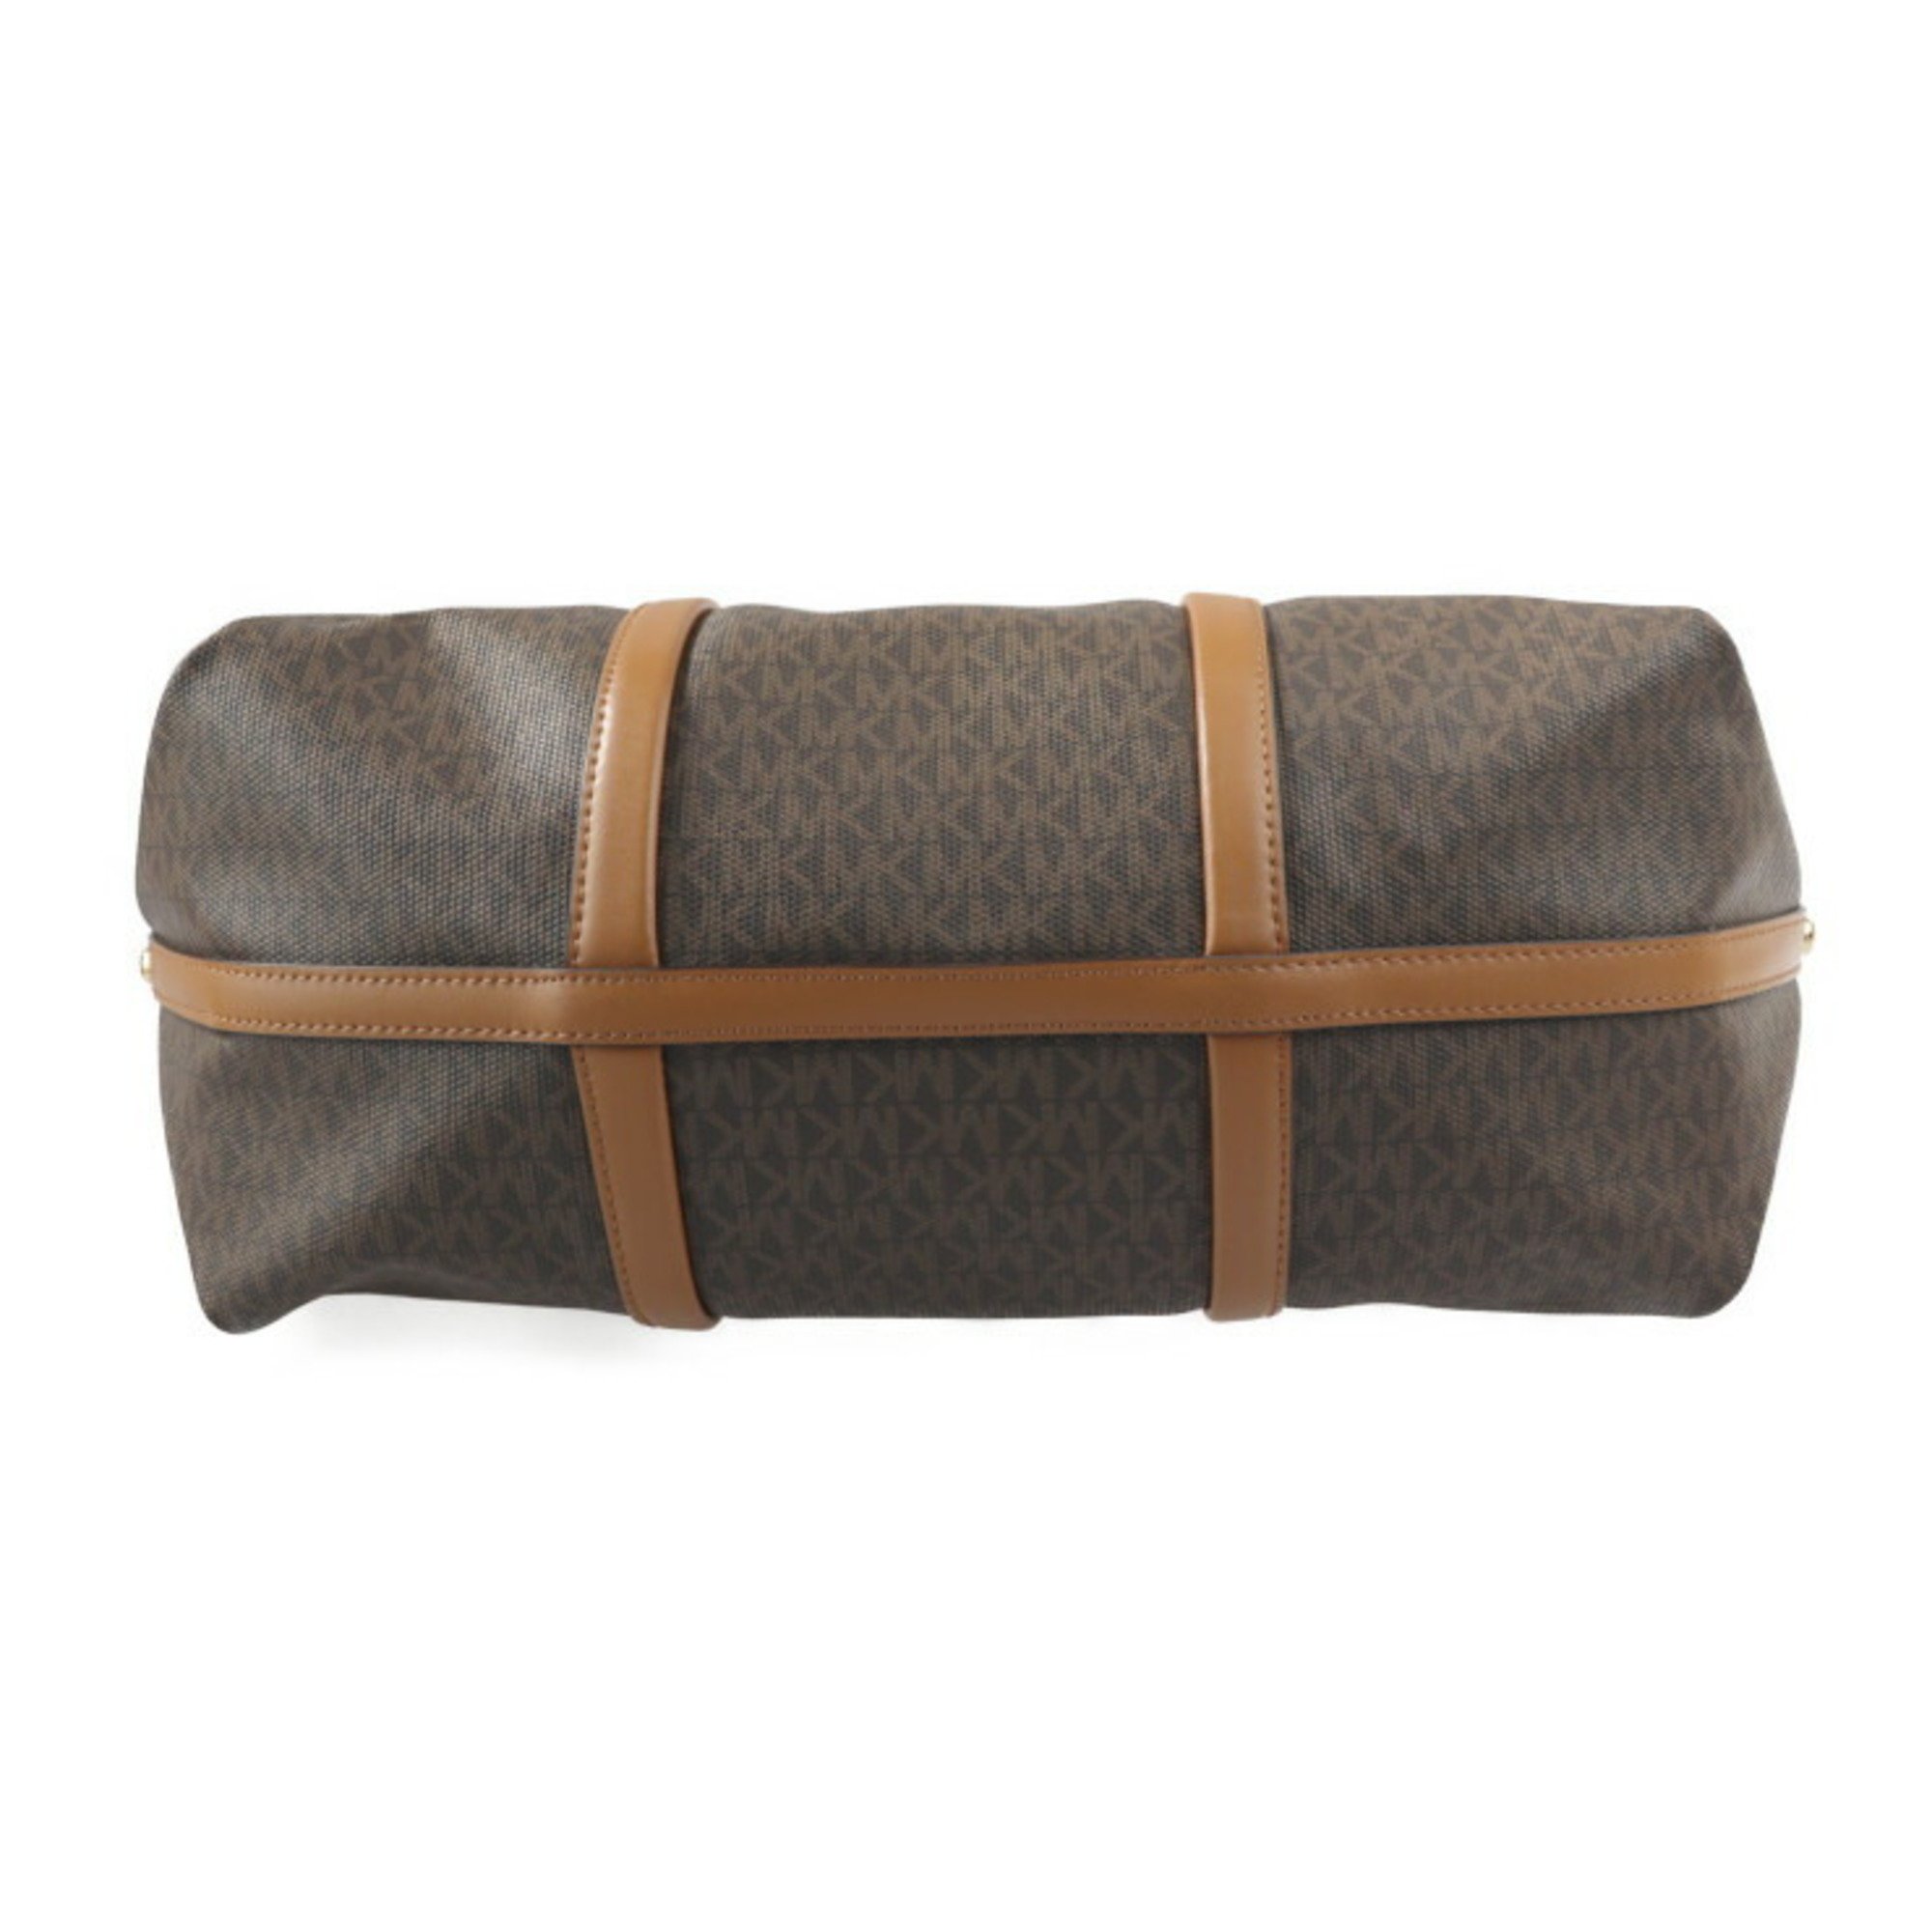 Michael Kors Tote Bag 30T0GKNT3B PVC Leather Brown Series Gold Hardware 2WAY Shoulder